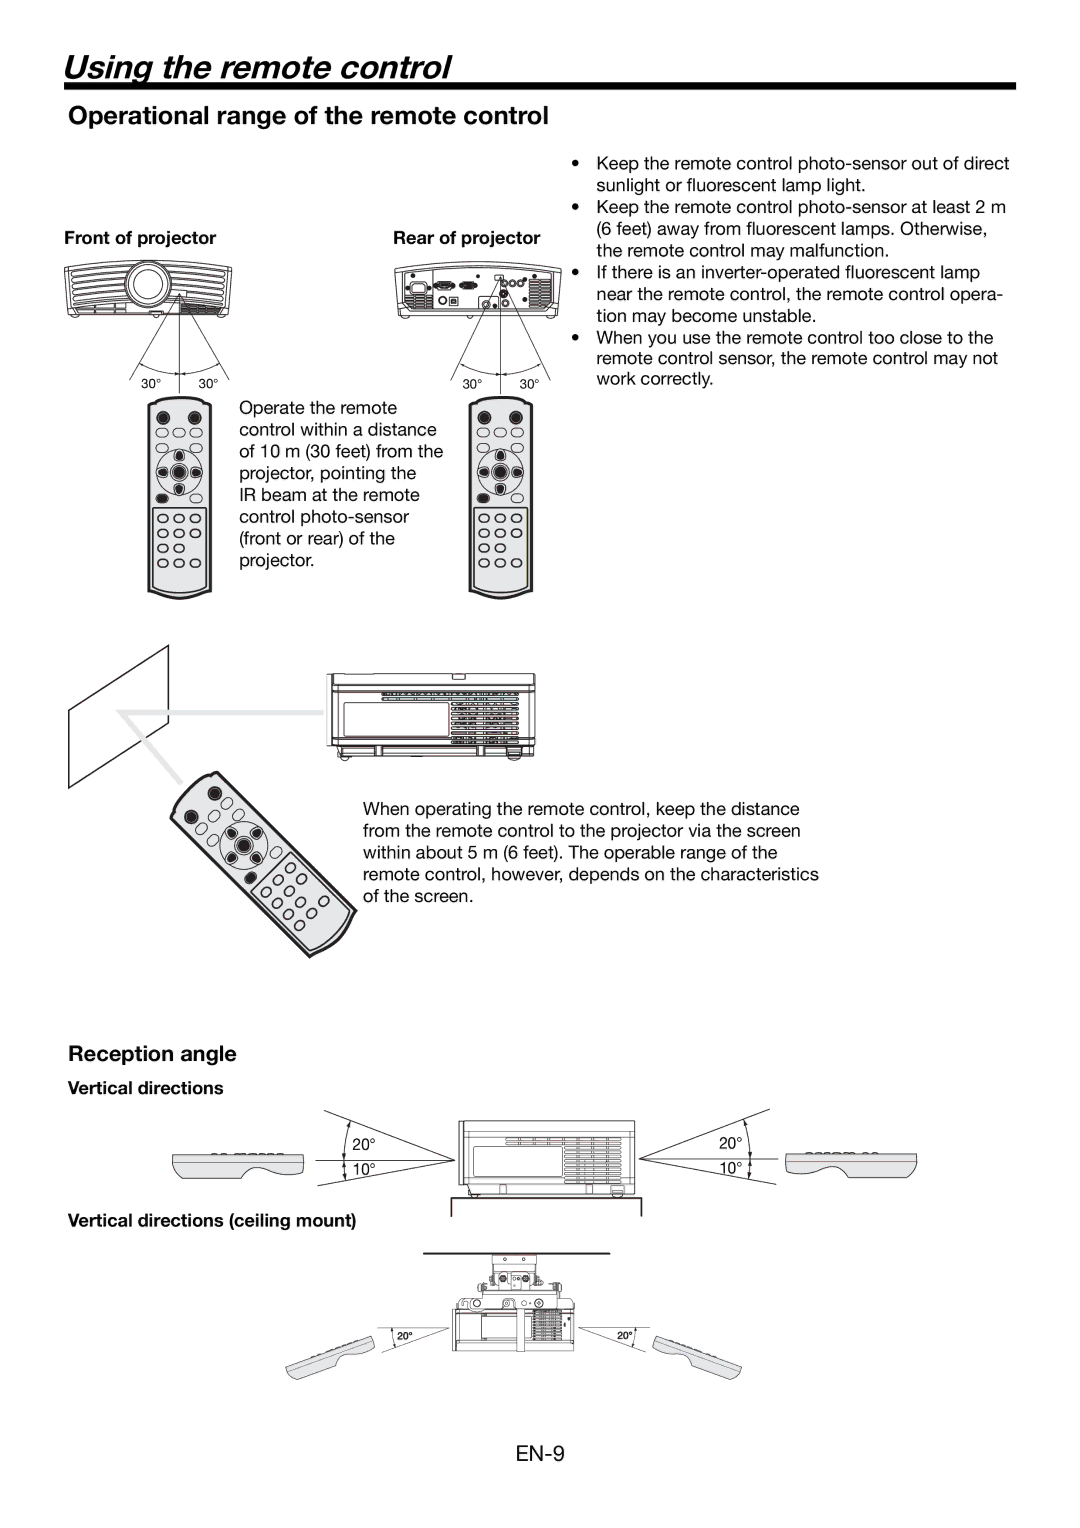 Mitsubishi Electronics HC1500 Using the remote control, Operational range of the remote control, Reception angle 